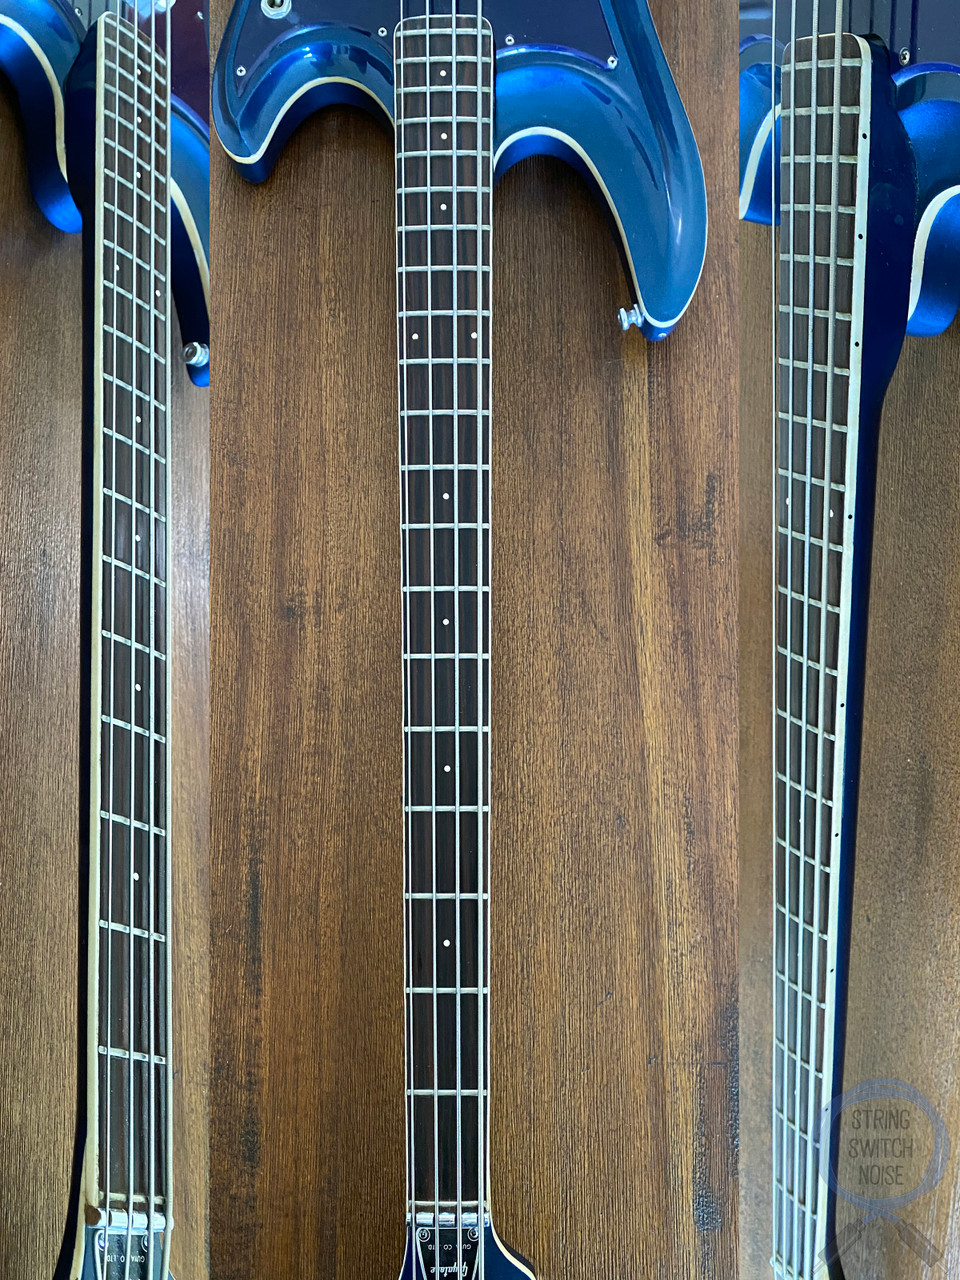 Guyatone, EB-9 Bass, Sharp 5, Blue Sparkle, MIJ, 1968 - early 70s